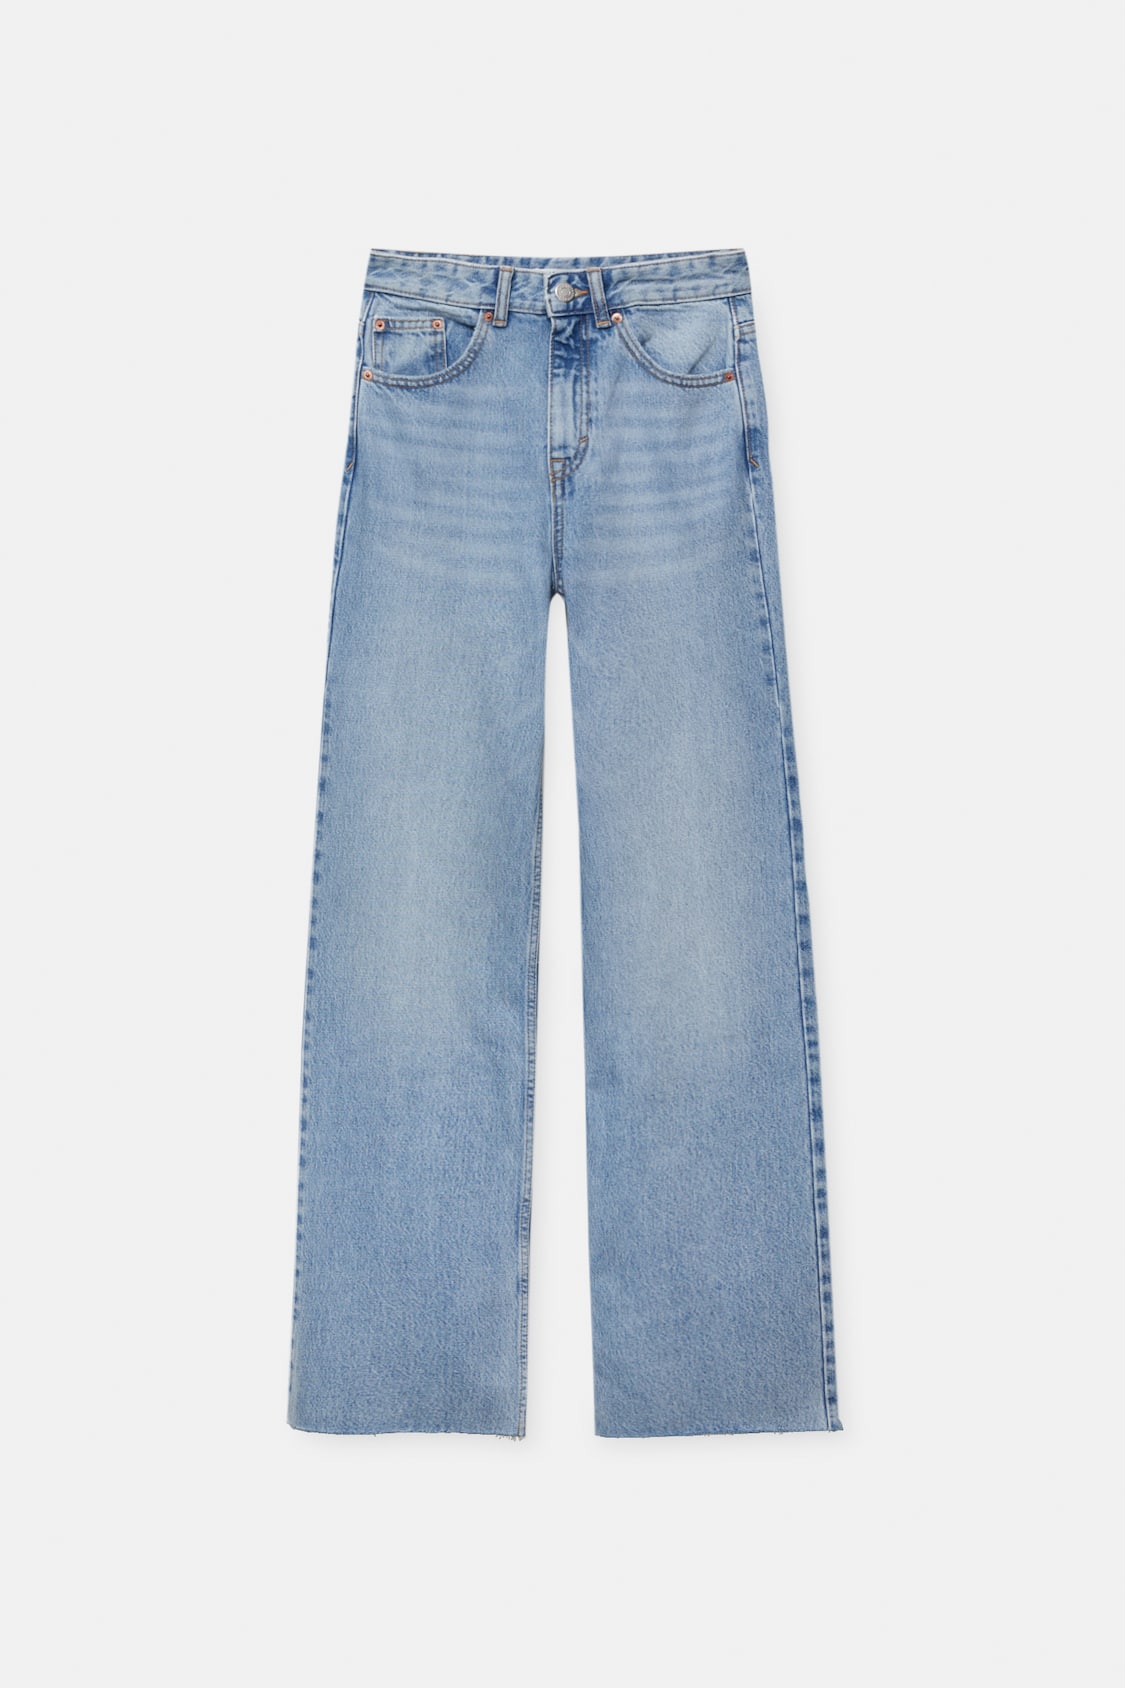 Straight - Jeans - Clothing - Woman - PULL&BEAR Panamá